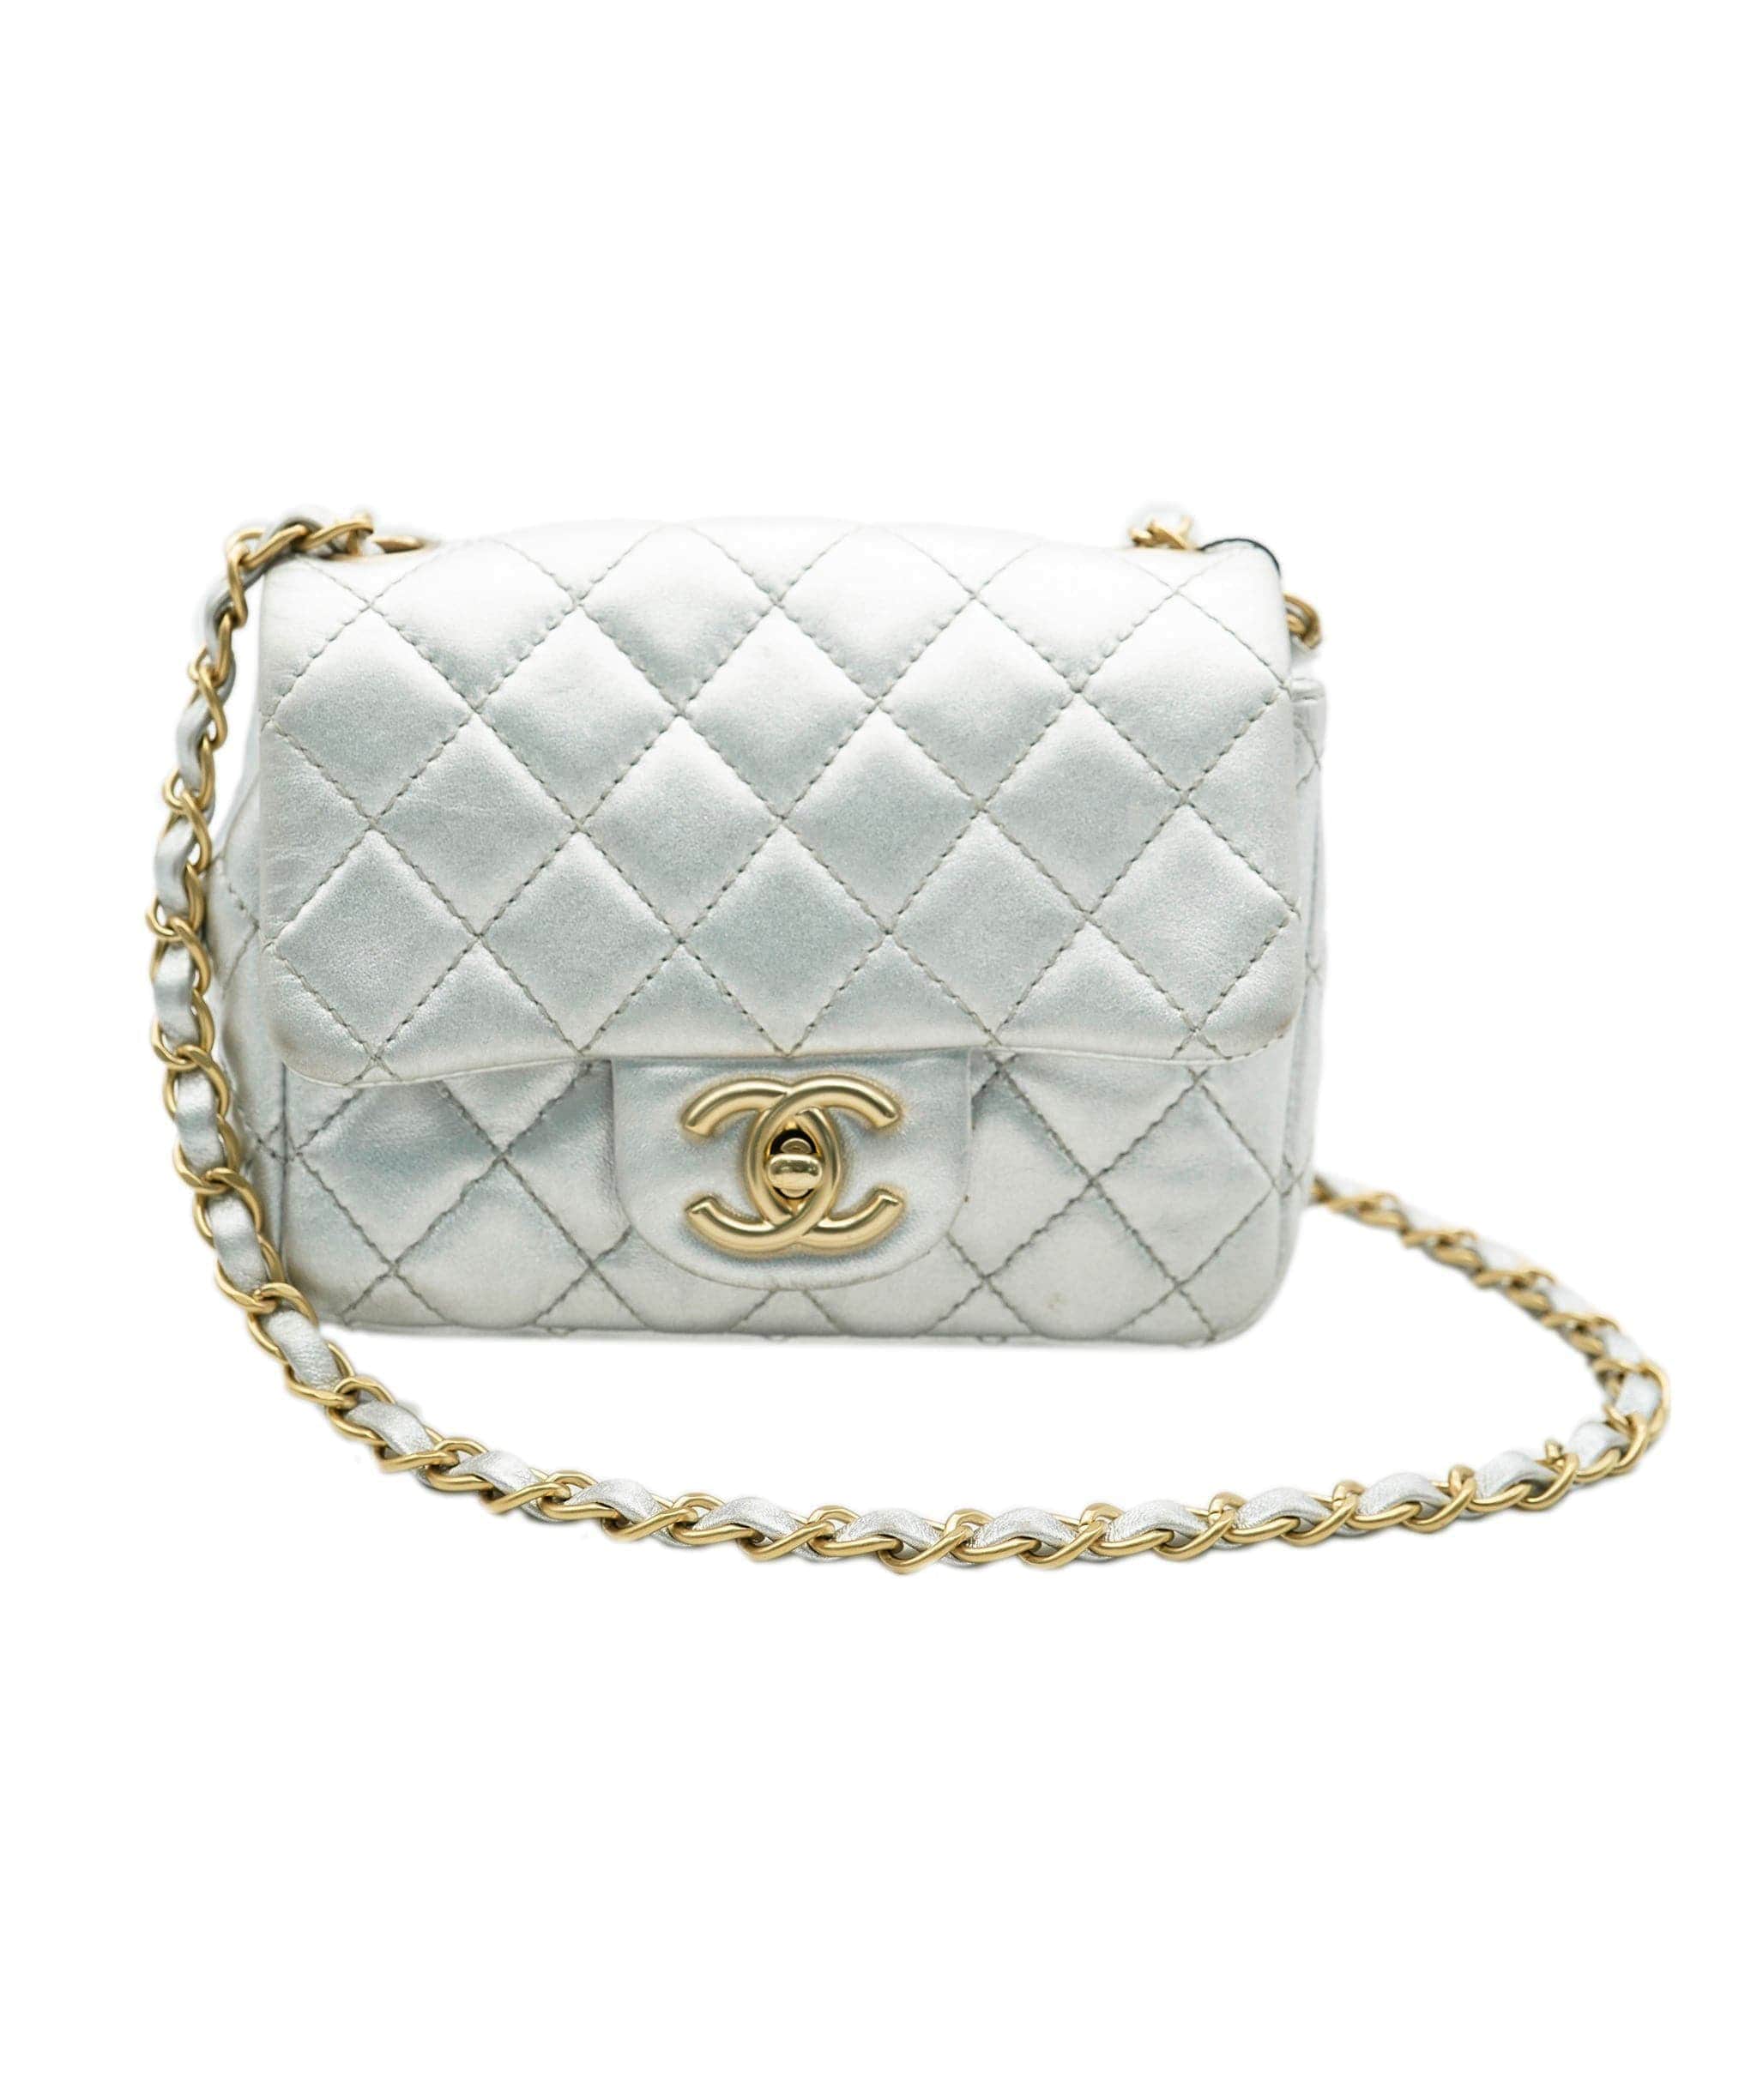 Chanel Mini Kelly Bag  Chanel handbags, Bags, Kelly bag